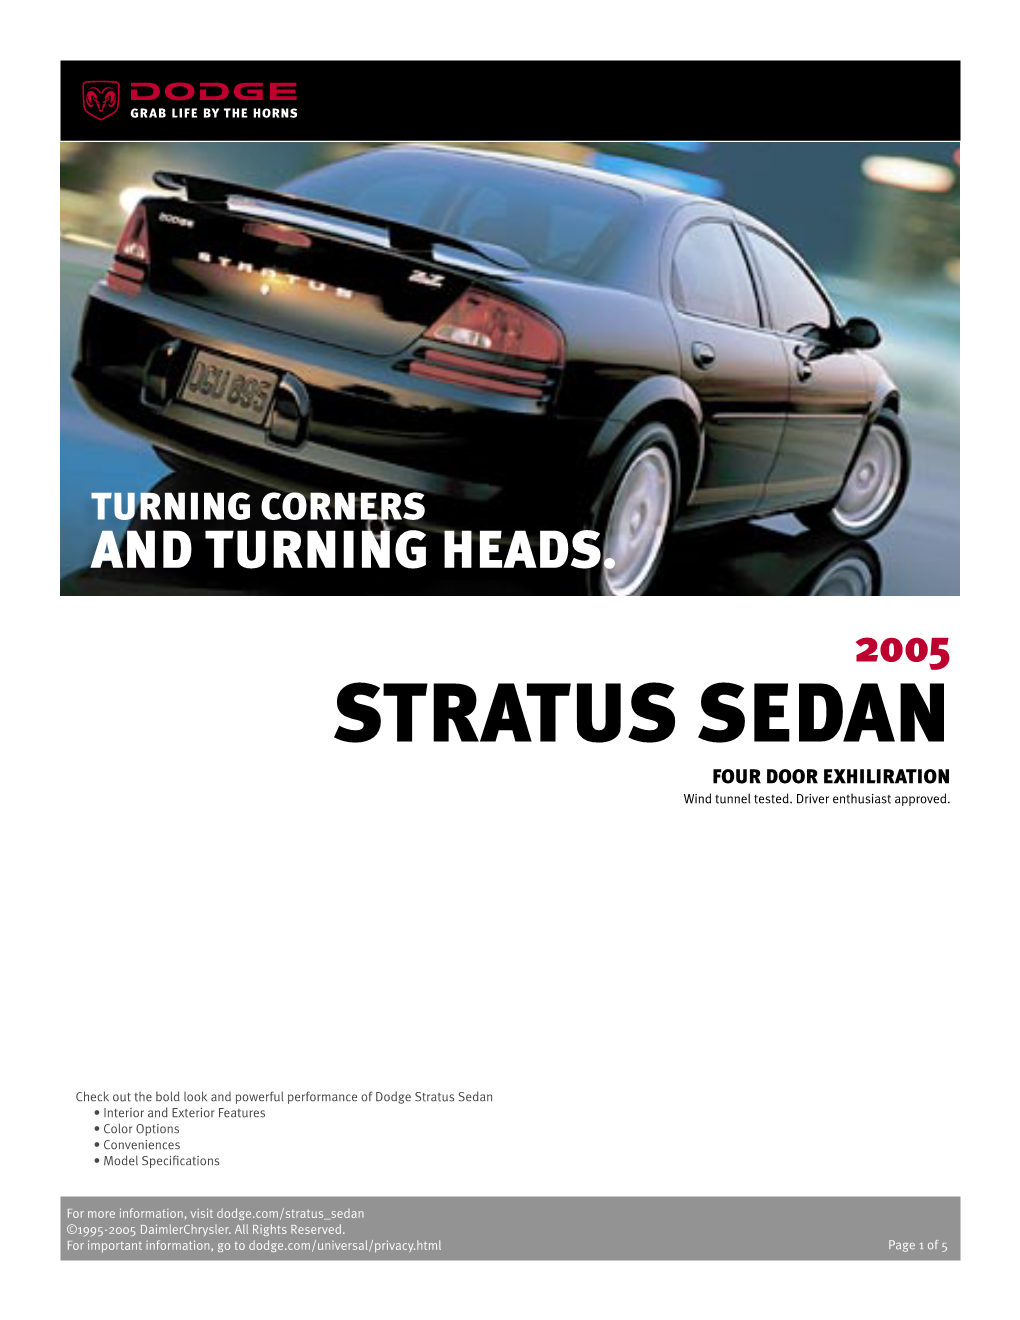 2005 Dodge Stratus Sedan Doesn’T Fall Short Satisfying Your Decibel Cravings, Either